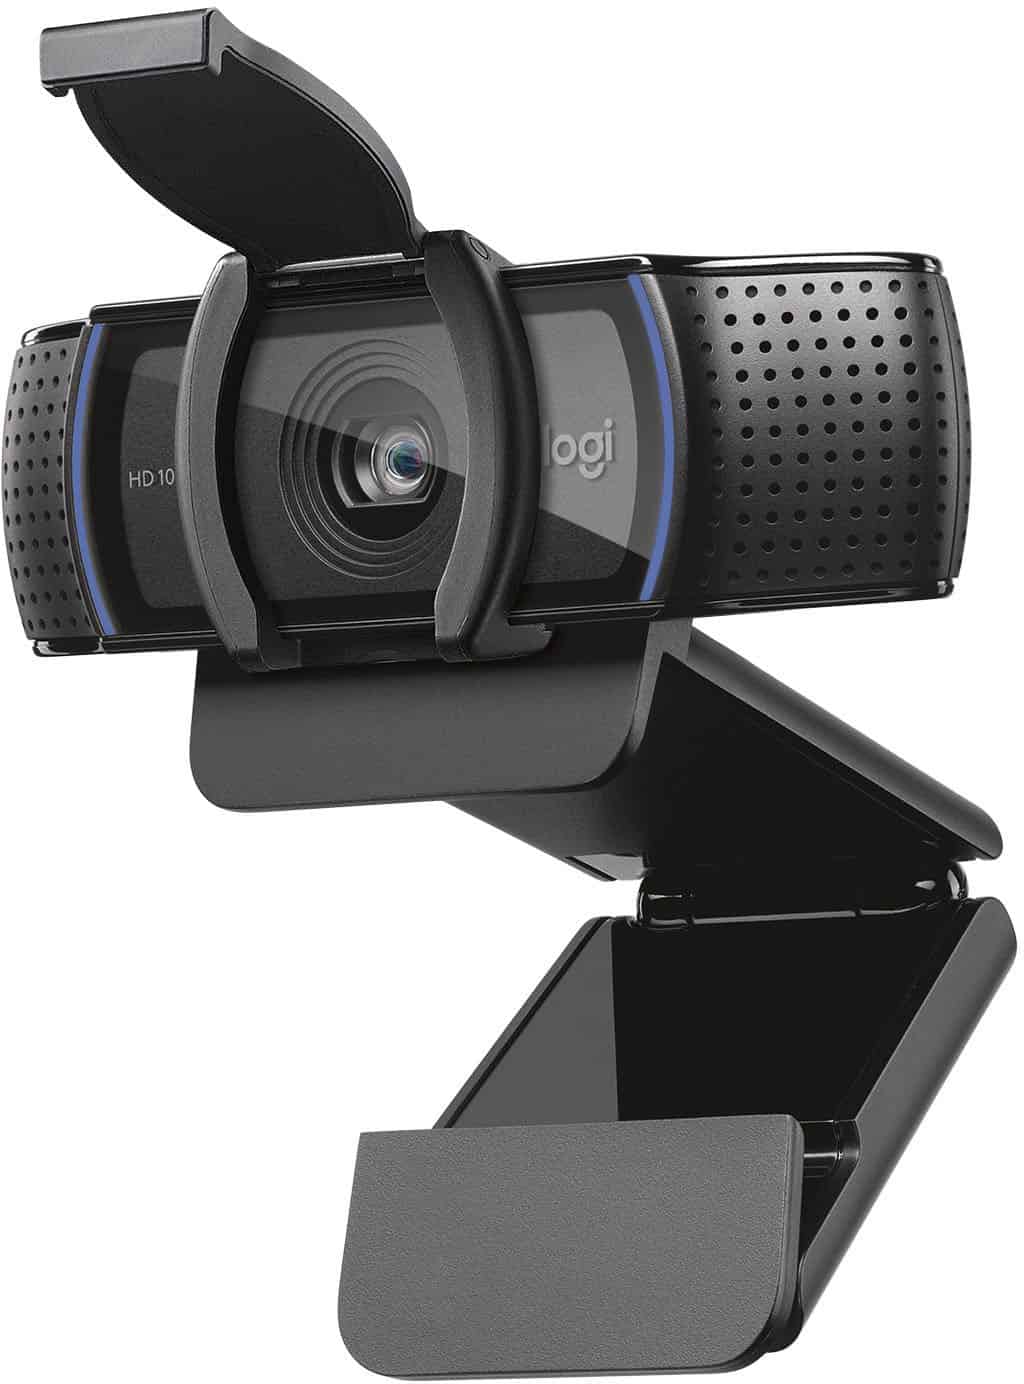 Deal Alert: $10 Discount on Logitech C920s Pro Webcam